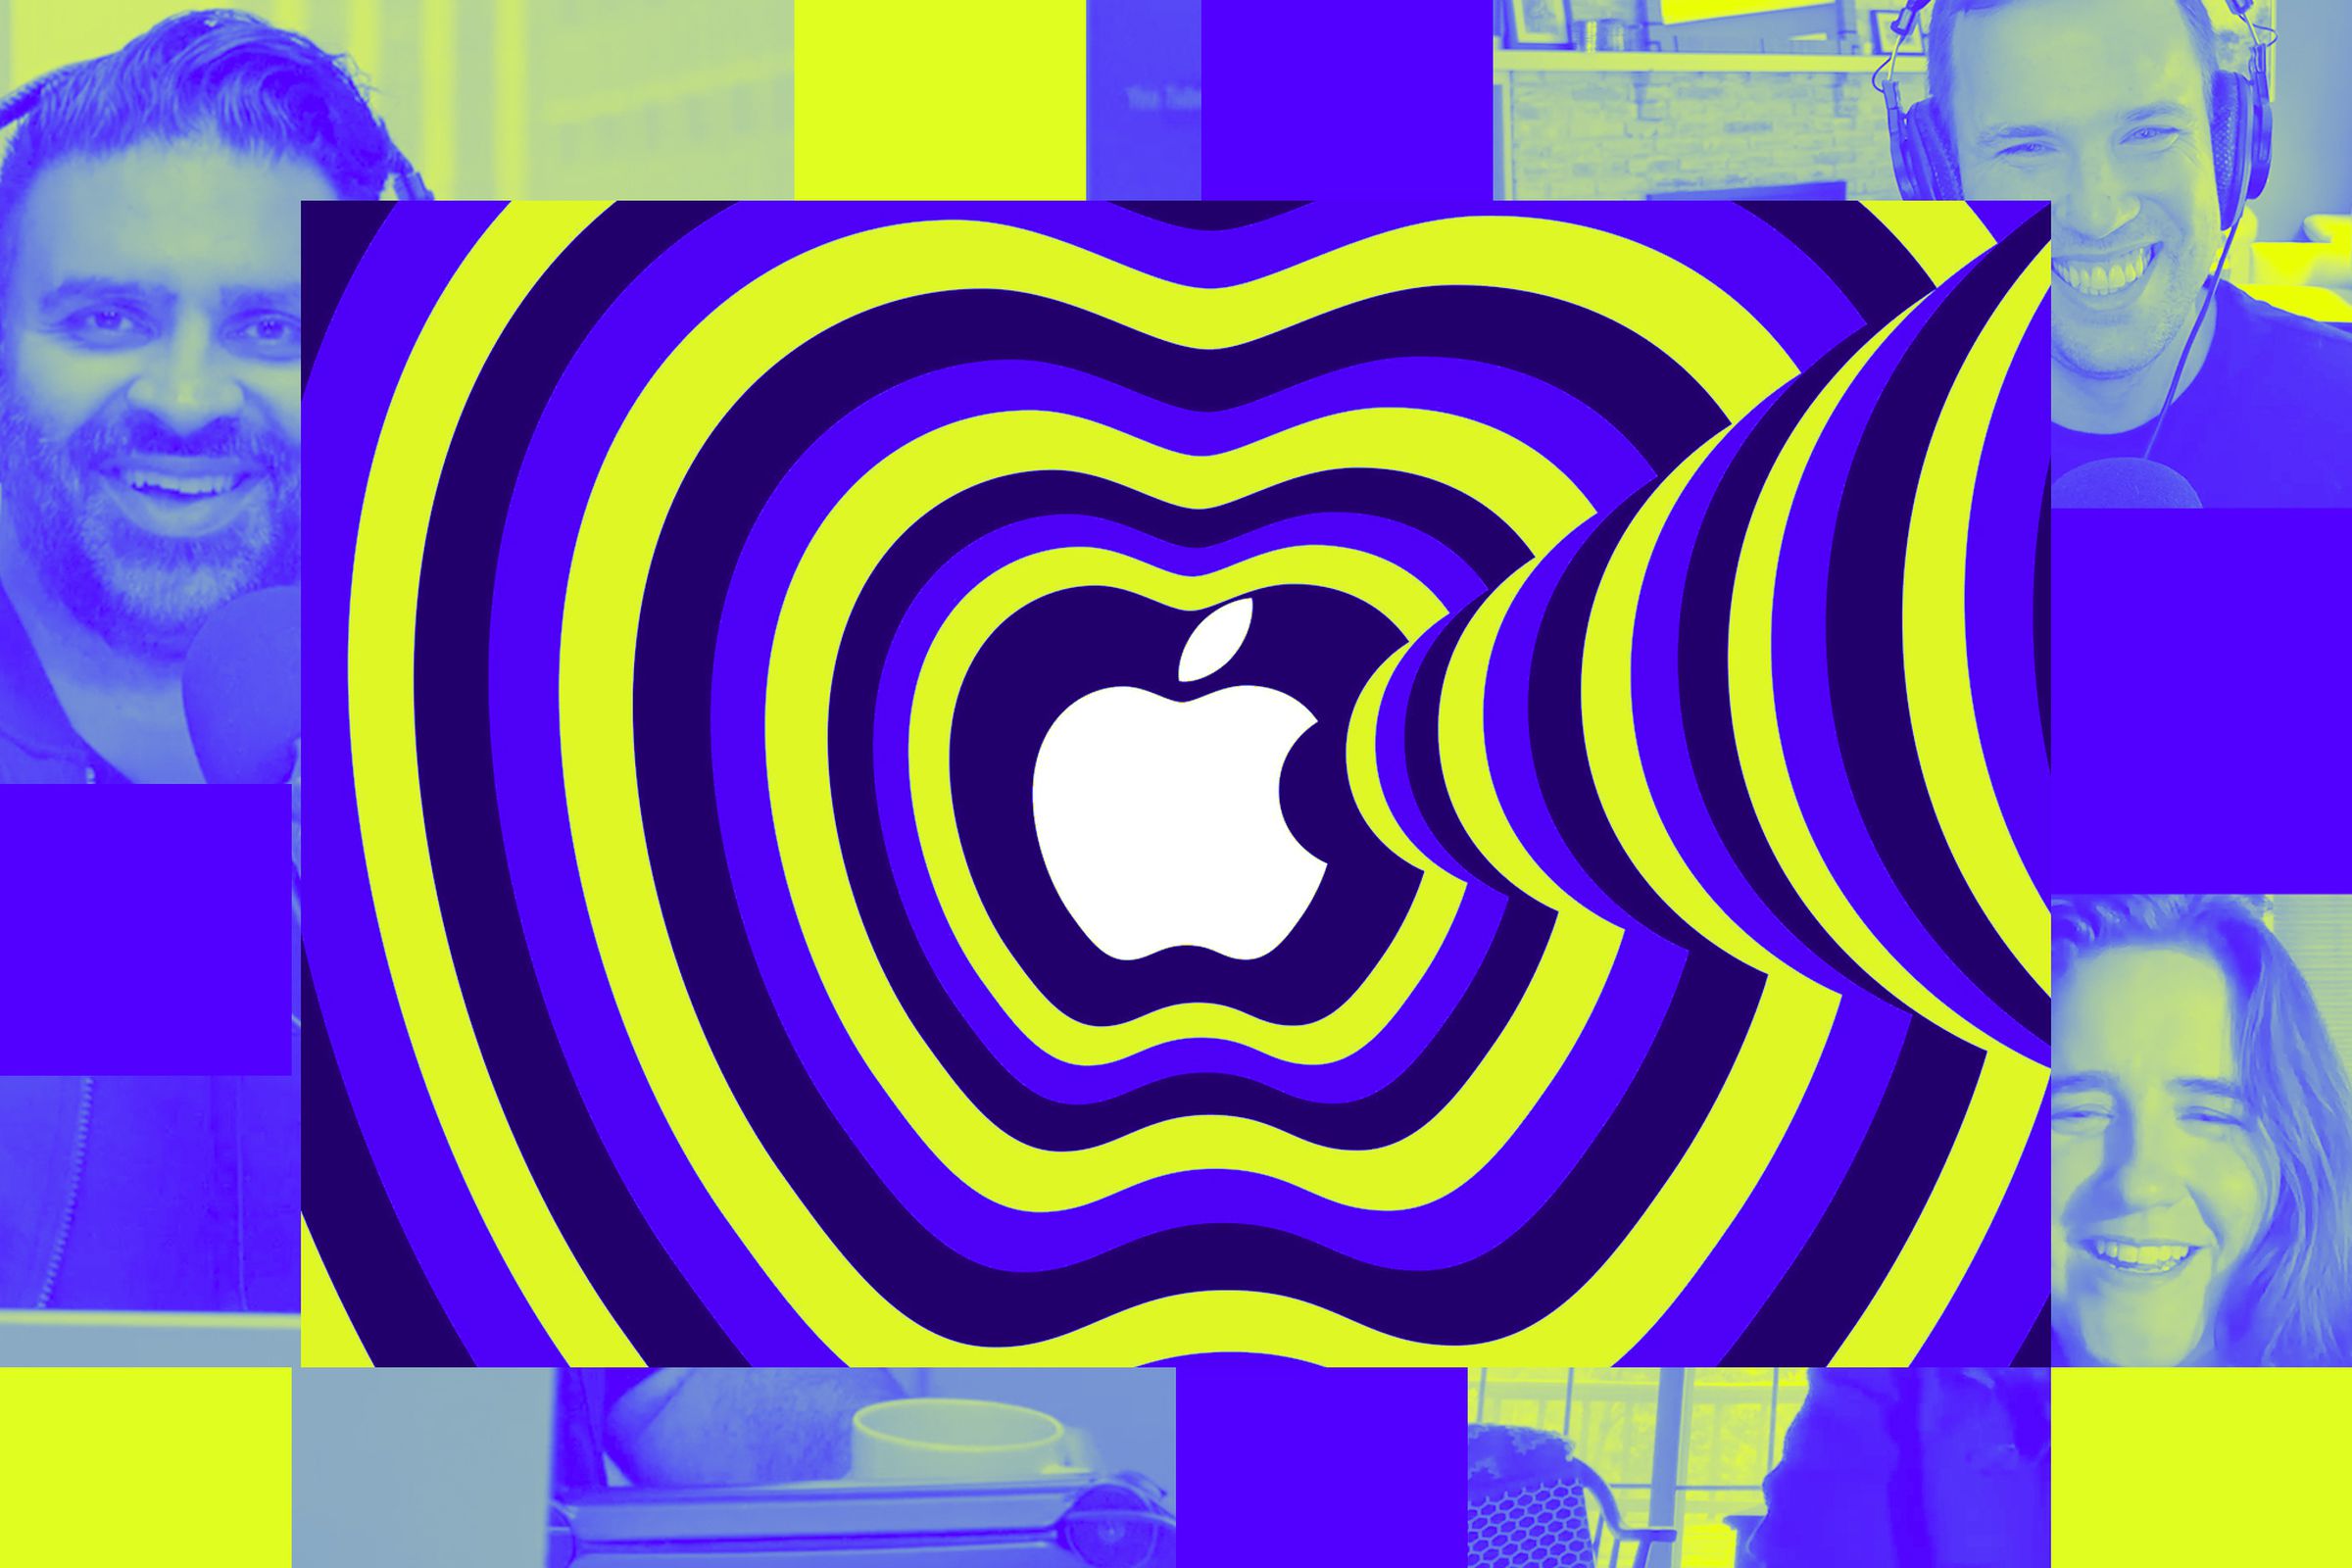 An Apple logo over a Vergecast illustration